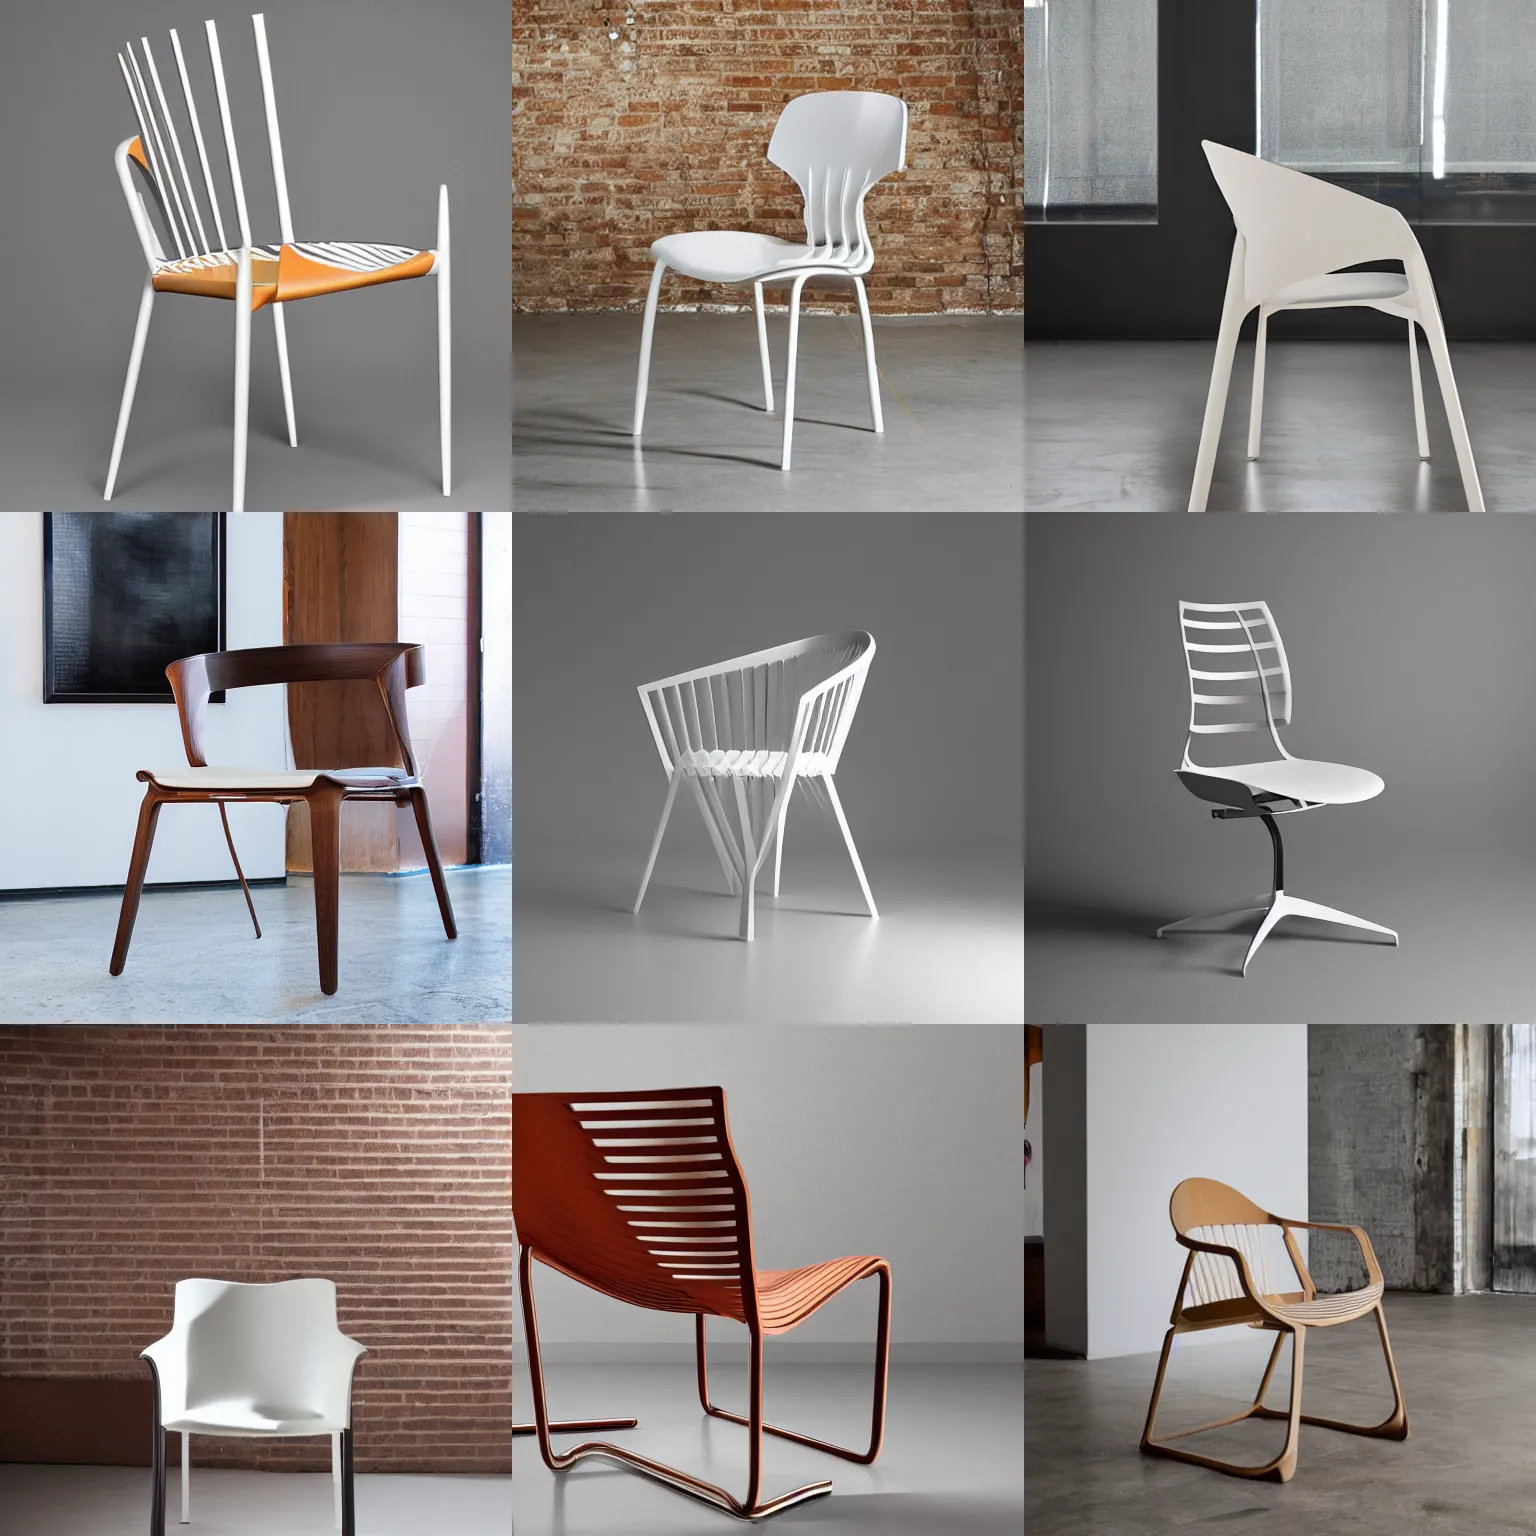 Prompt: studio photo award winning chair inspired by calatrava